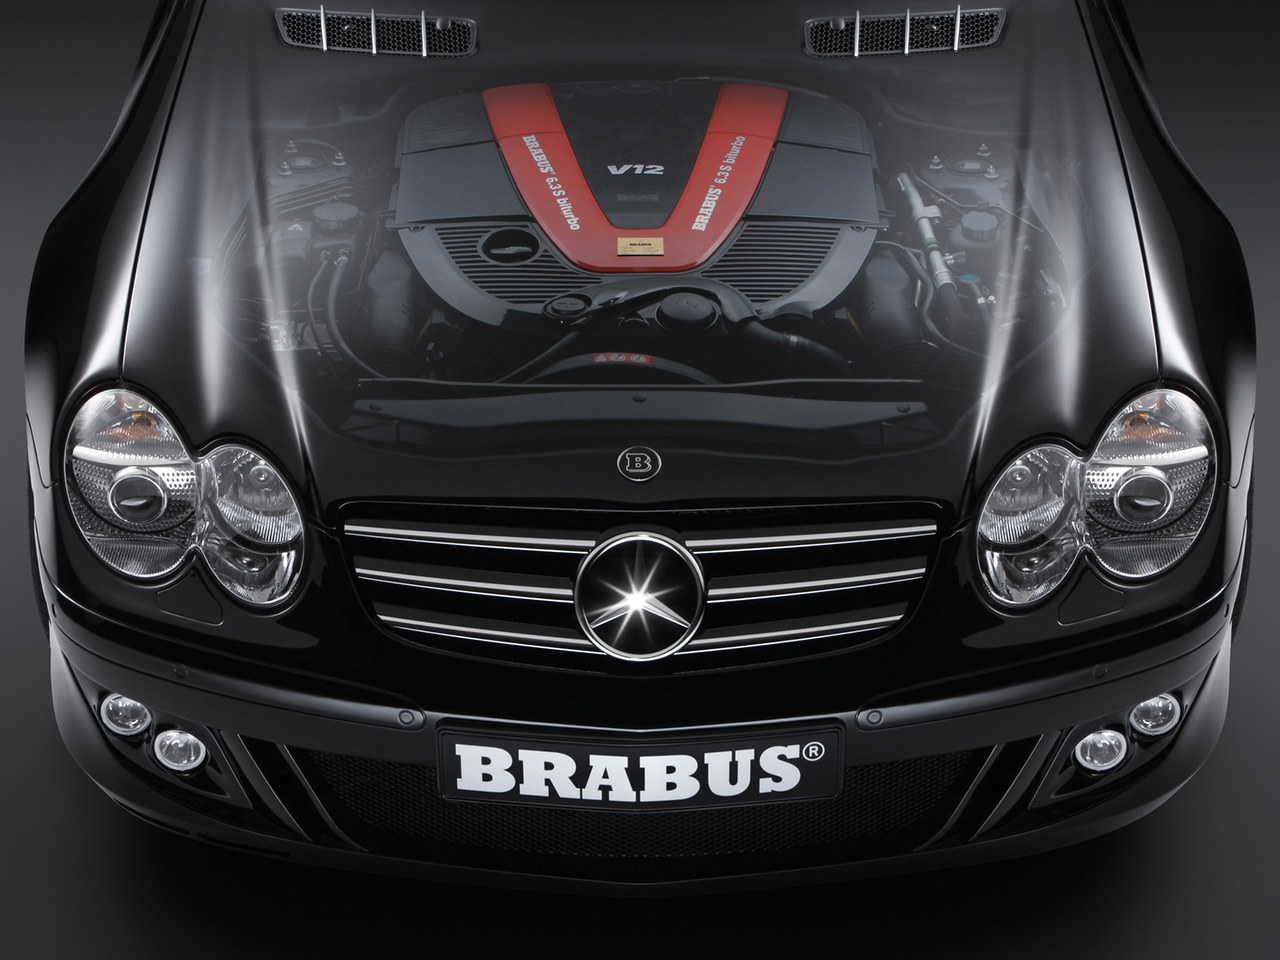 14478025662006-BRABUS-SV12-S-Biturbo-Roadster-Mercedes-Benz-SL-Class-Hood-Cutaway-View-1280x960